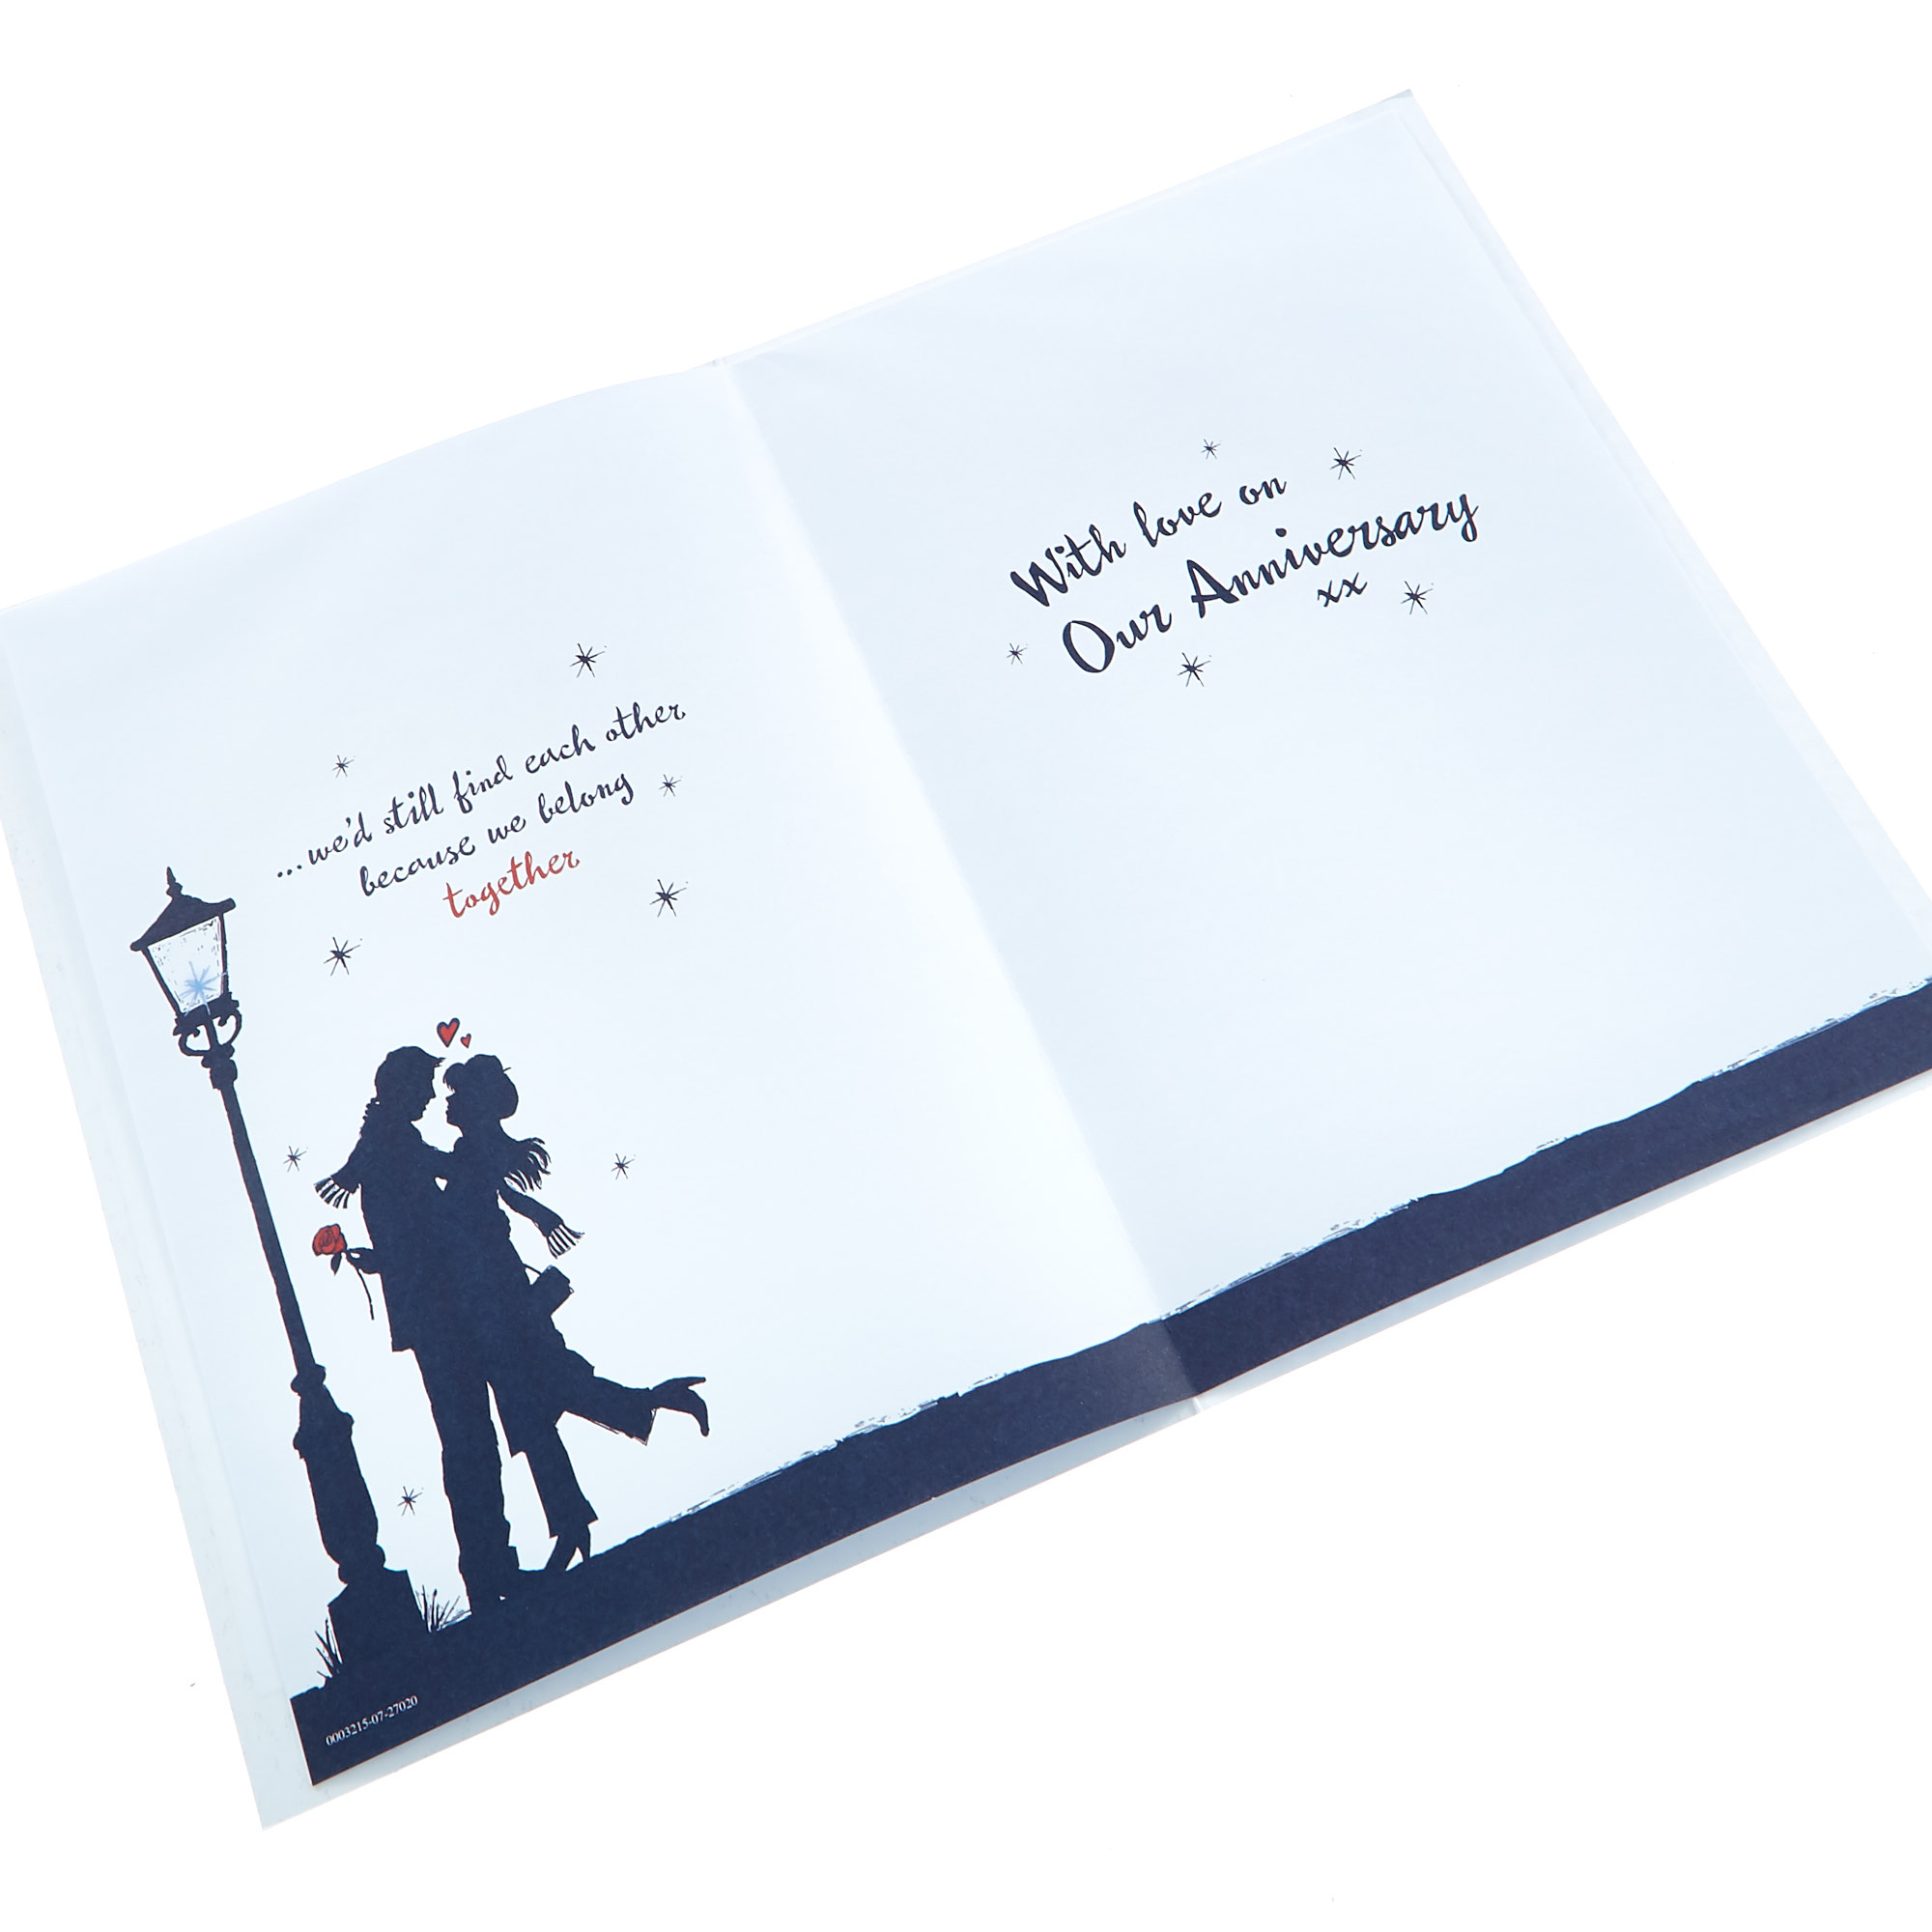 Anniversary Card - Husband, Silhouette